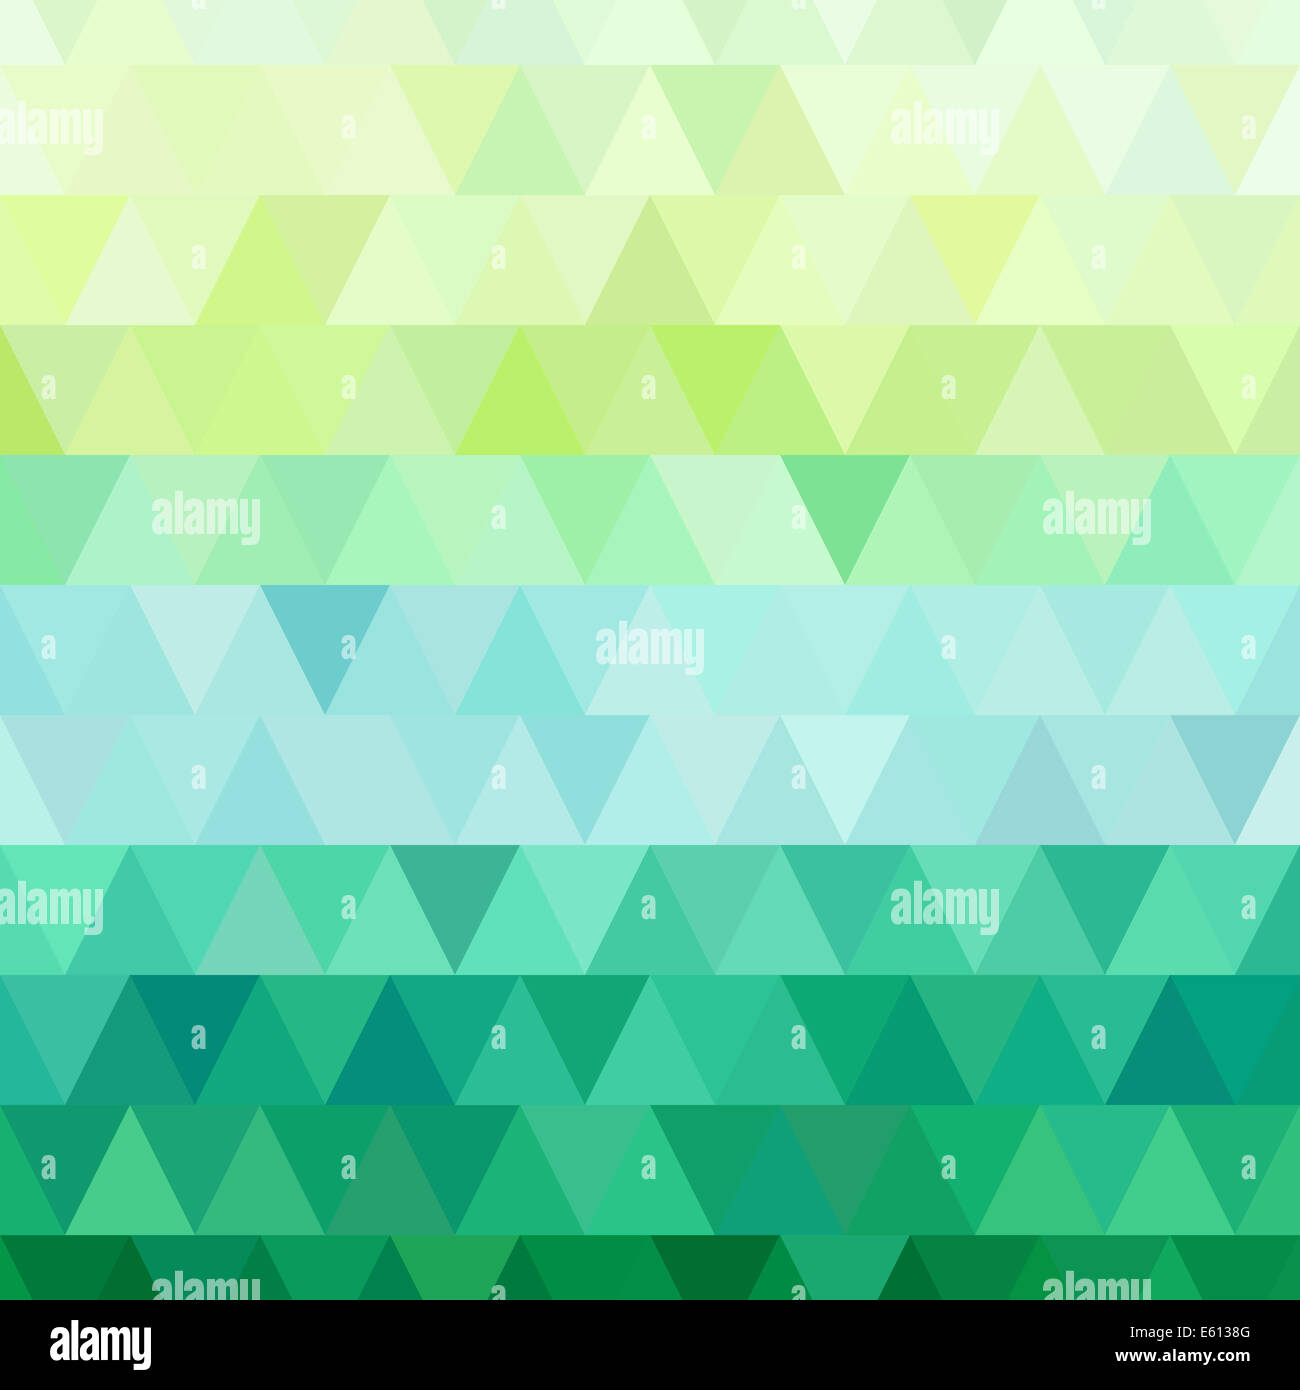 Luce texture pattern da trianle. Foto Stock